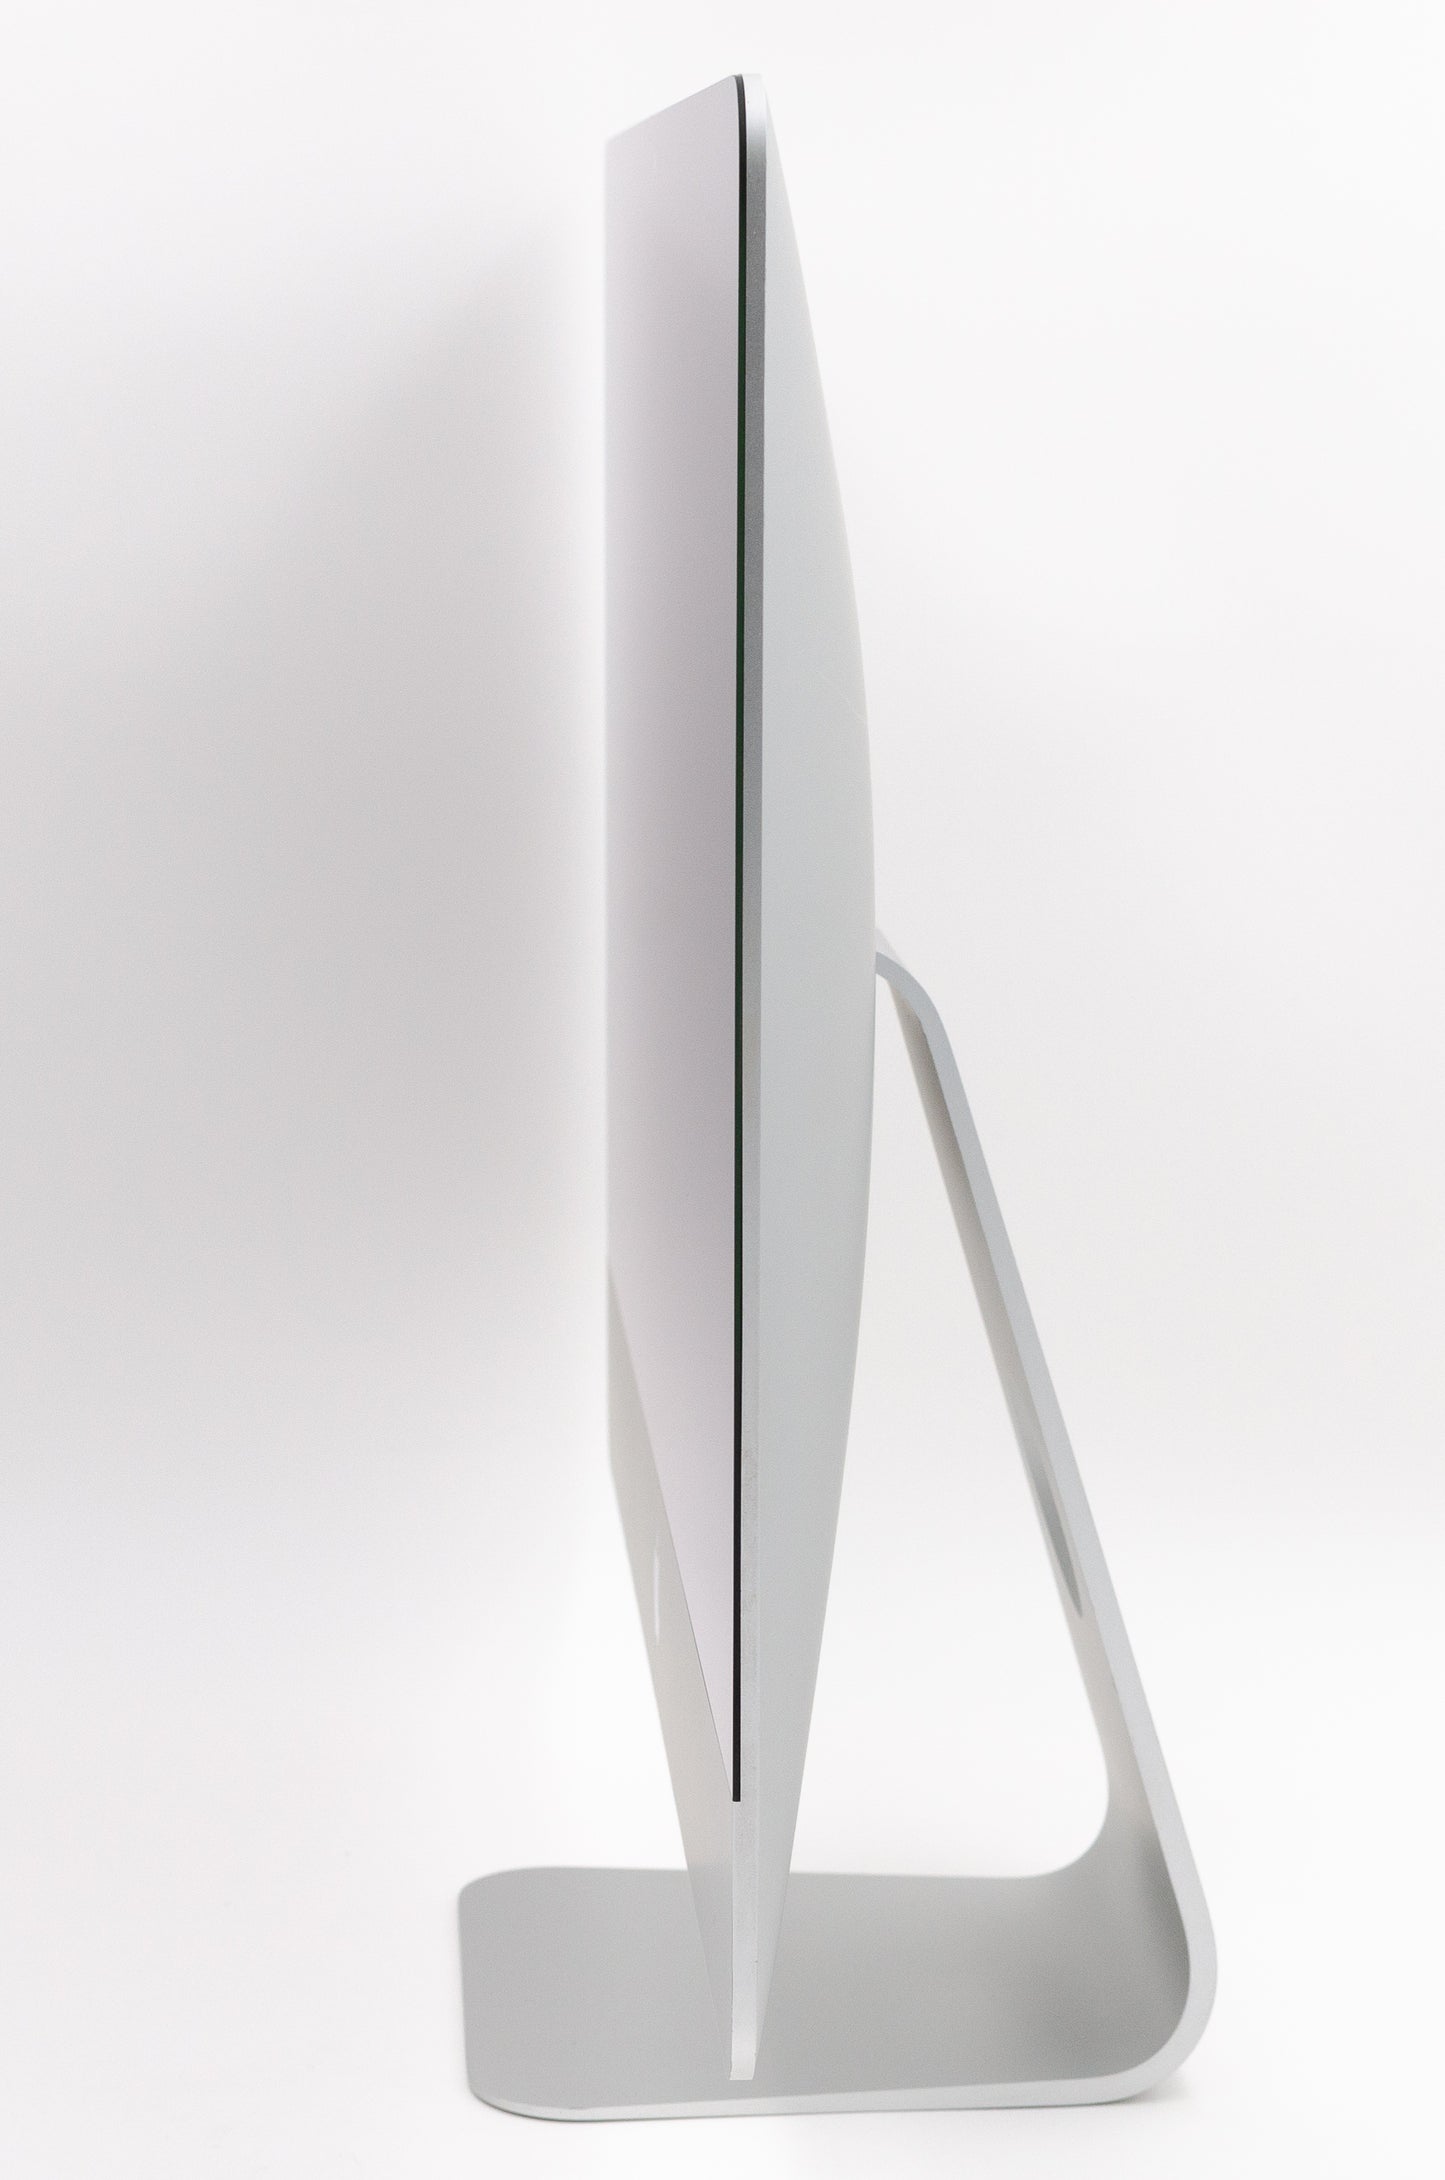 apple-late-2012-21.5-inch-imac-ultra-thin-a1418-aluminum-qci7 - 3.1ghz, 8gb ram, gt 650m - 512mb gpu-3